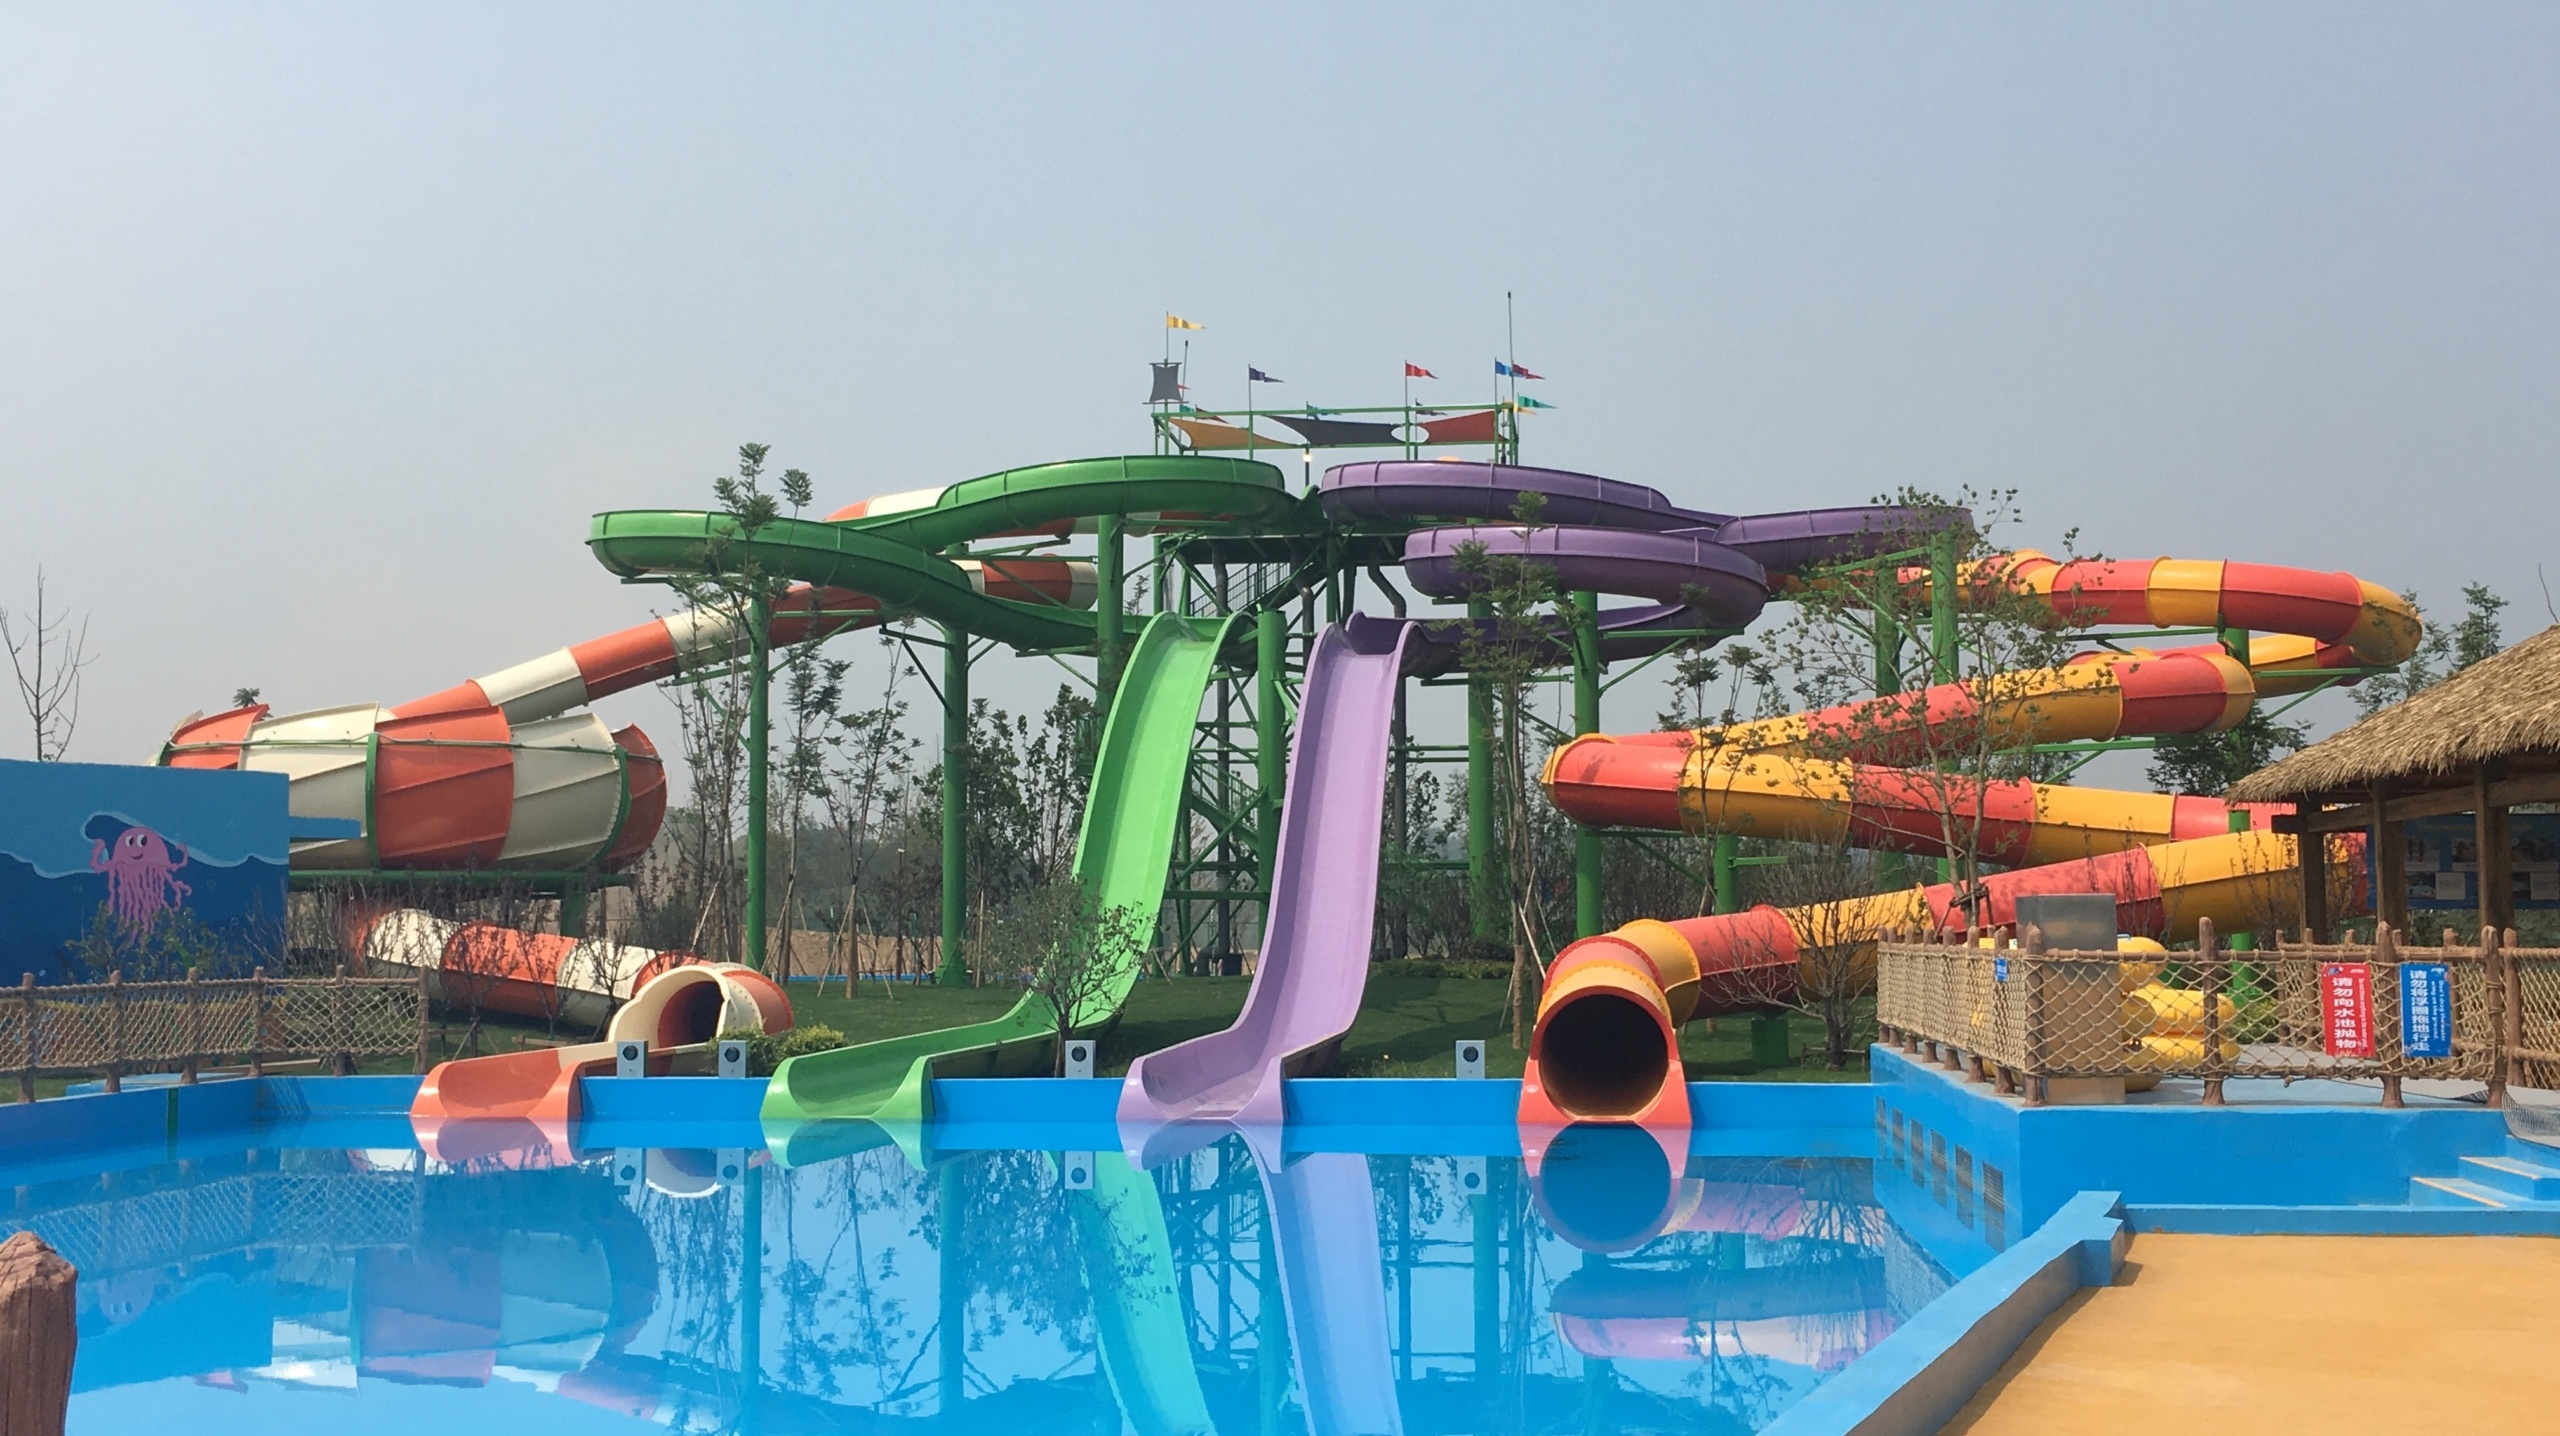 Slide Tower, Happy Oceans Water Park, Henan, China